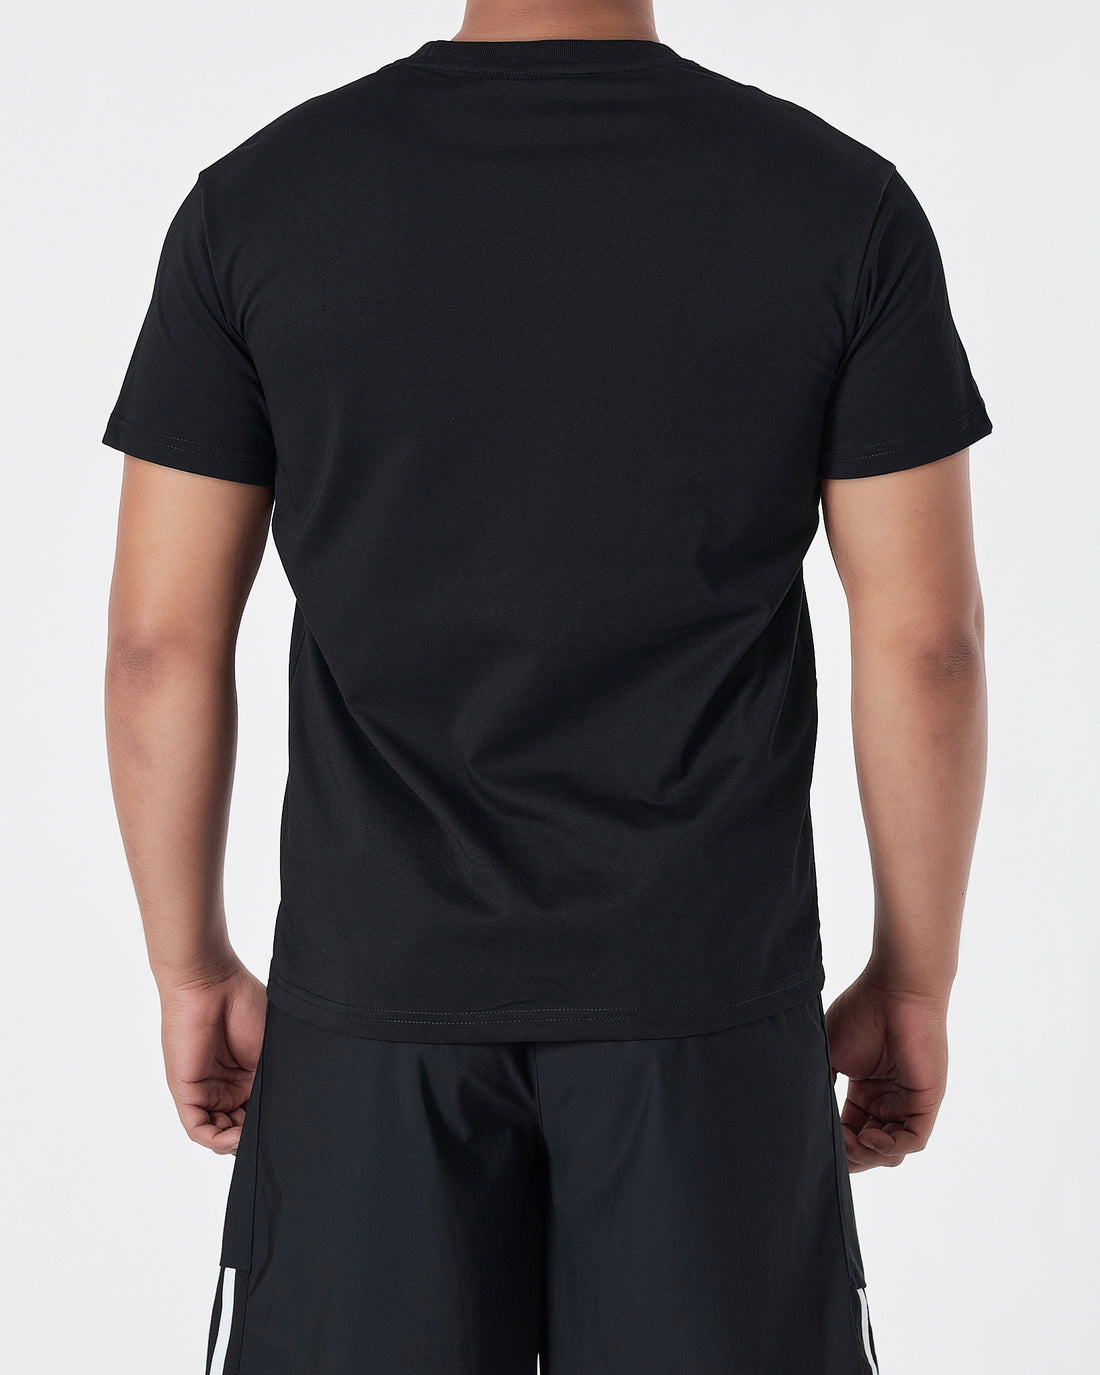 ADI Logo Embroidered Men Black Sport T-Shirt 14.90